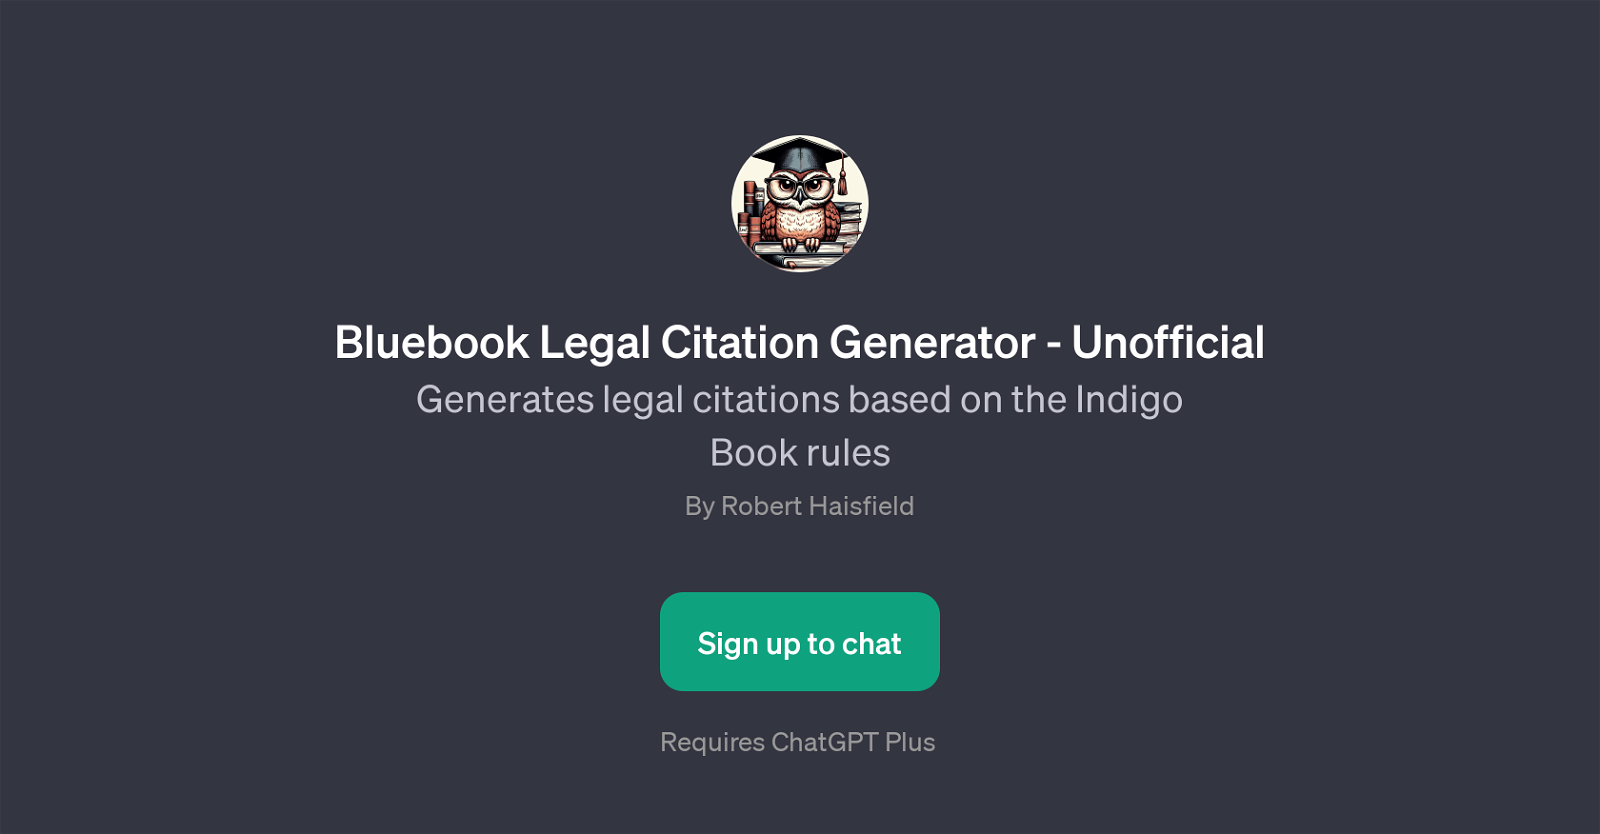 Bluebook Legal Citation Generator website